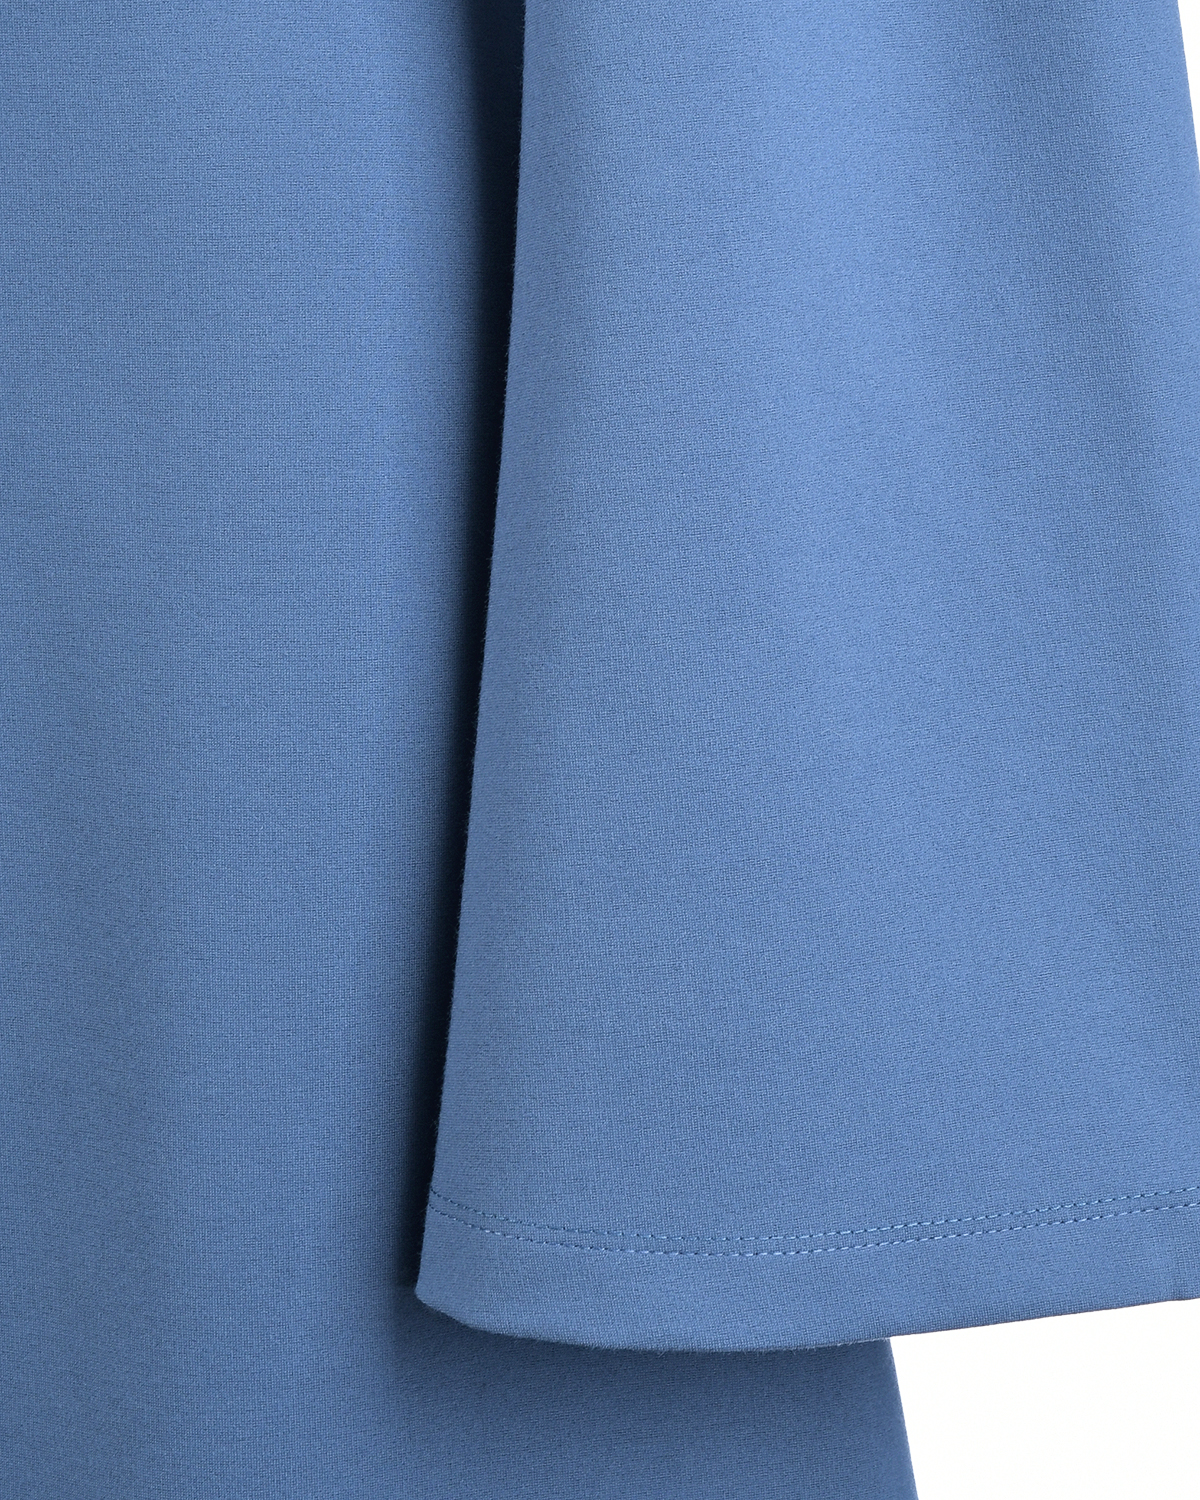 Синее платье с рукавами клеш Dan Maralex, размер 42, цвет синий - фото 9